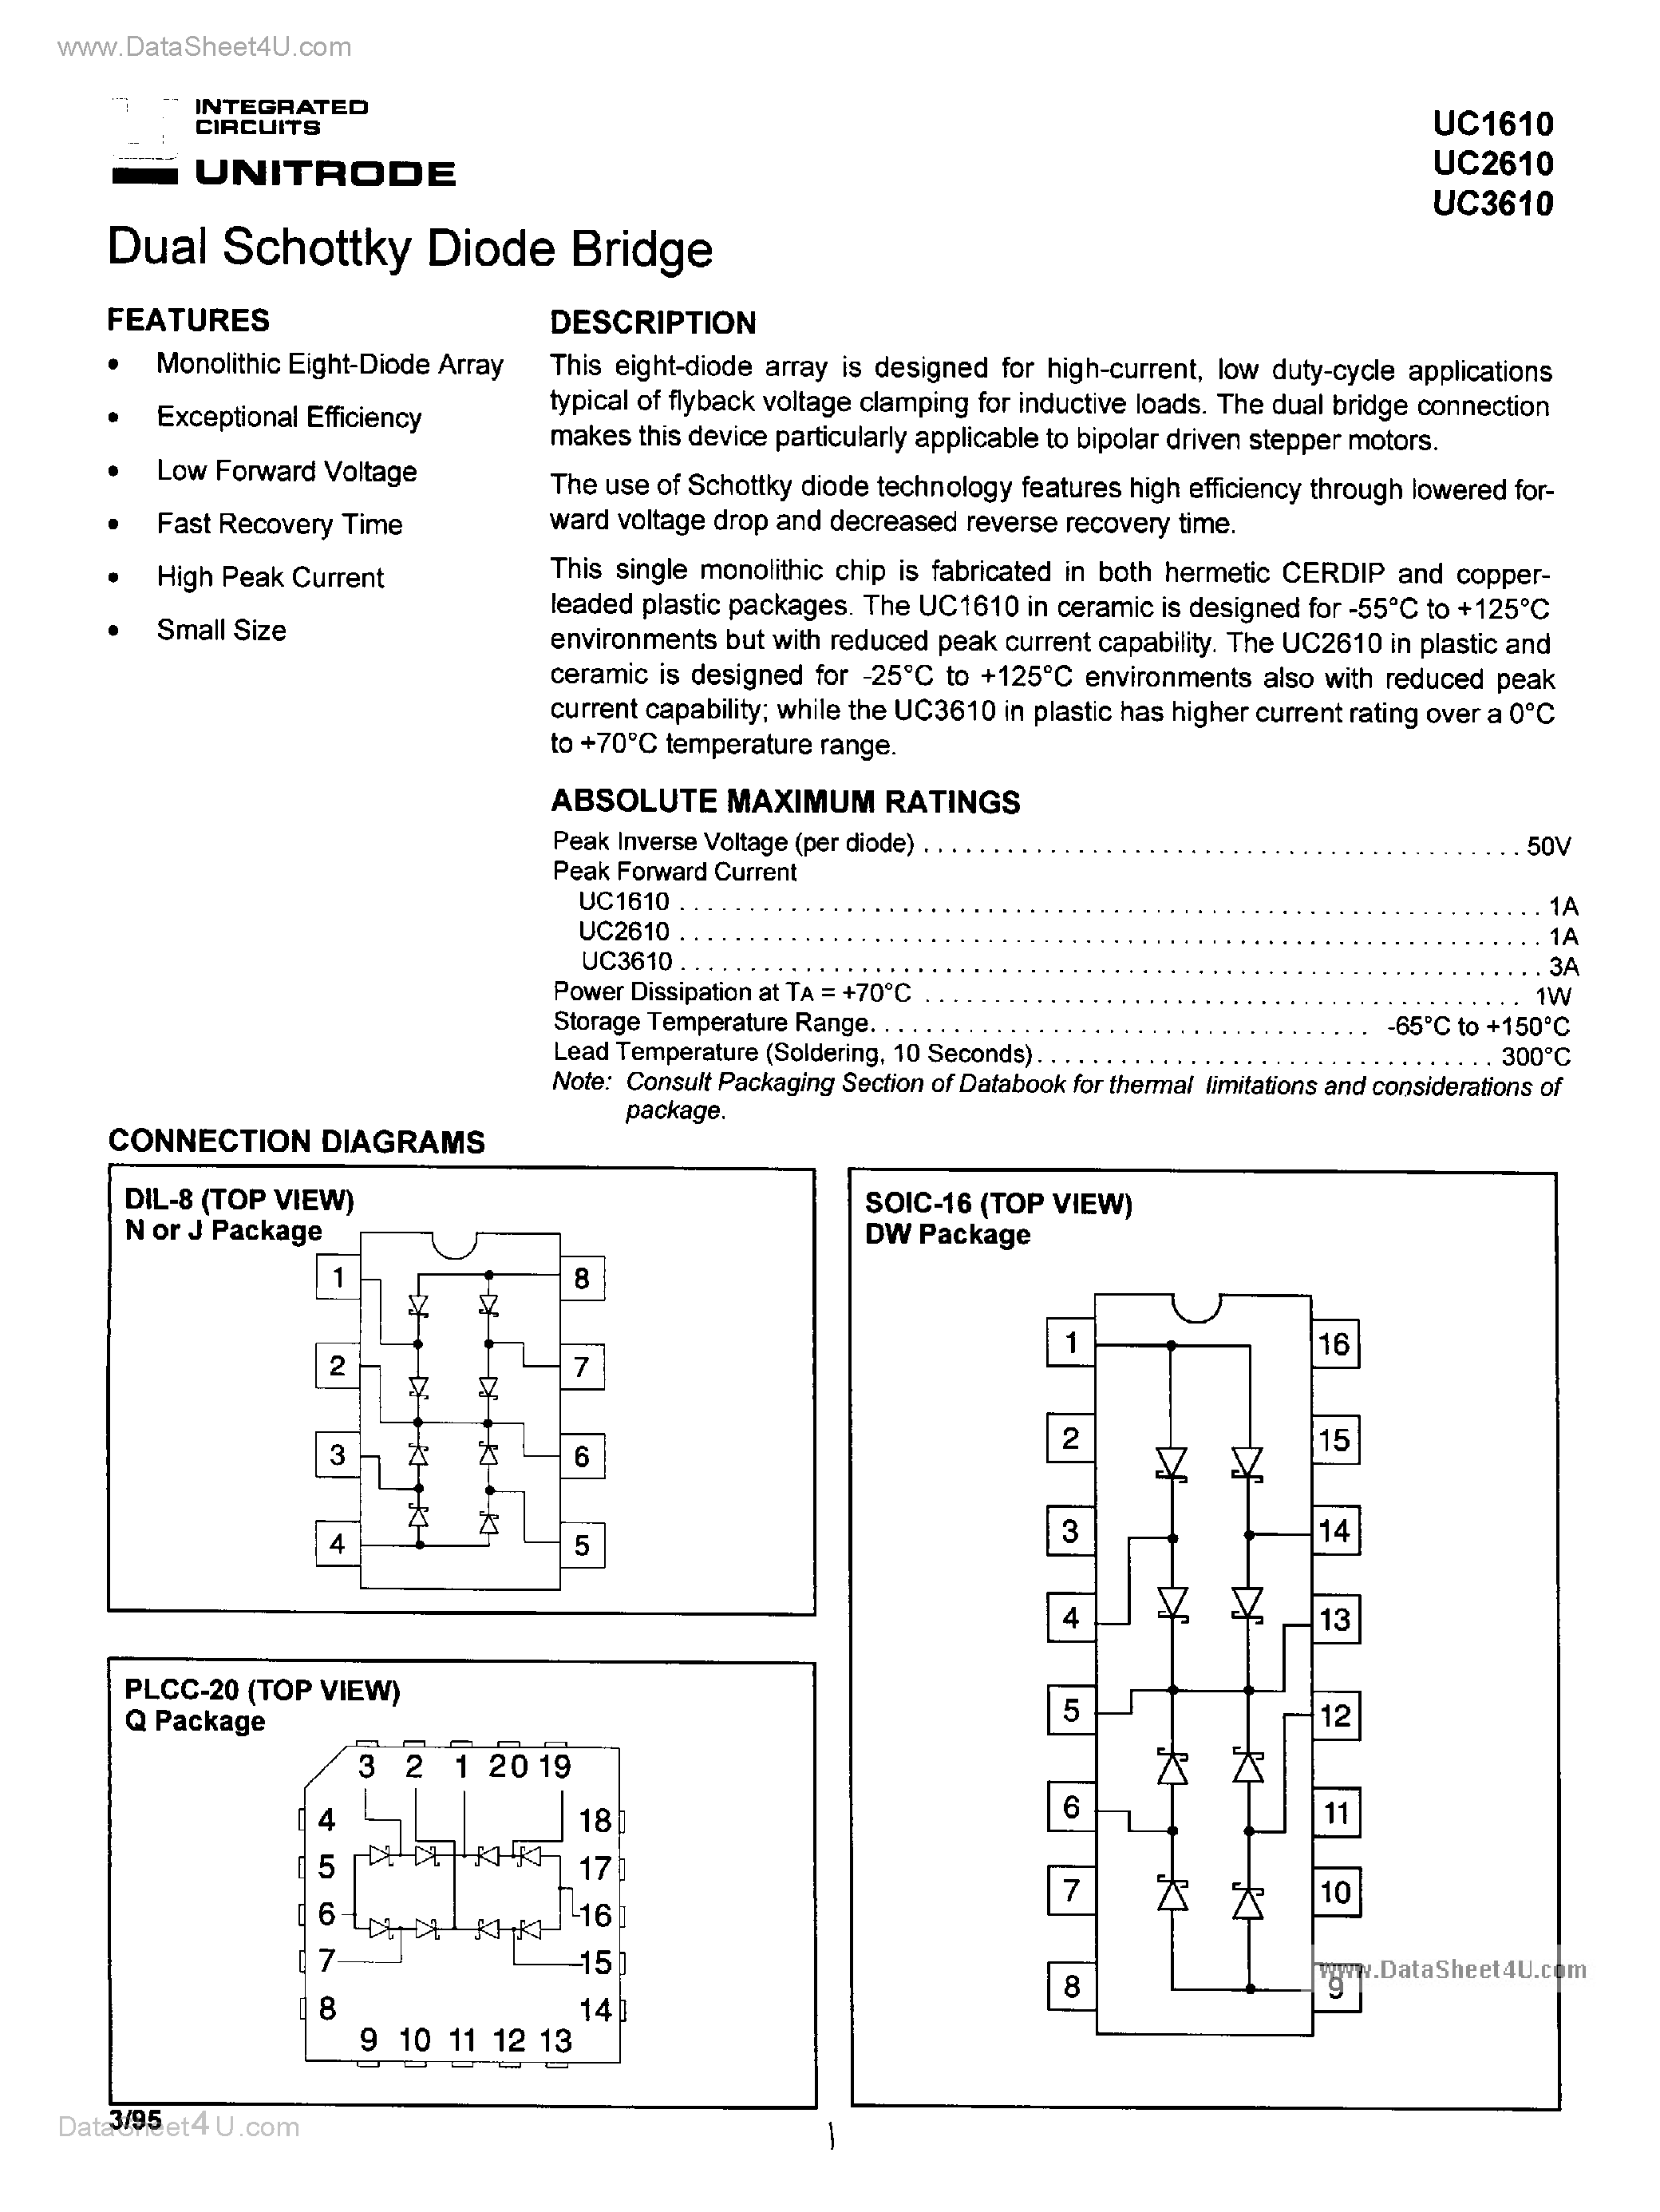 Даташит UC1610 - Dual Schottky Diode Bridge страница 1